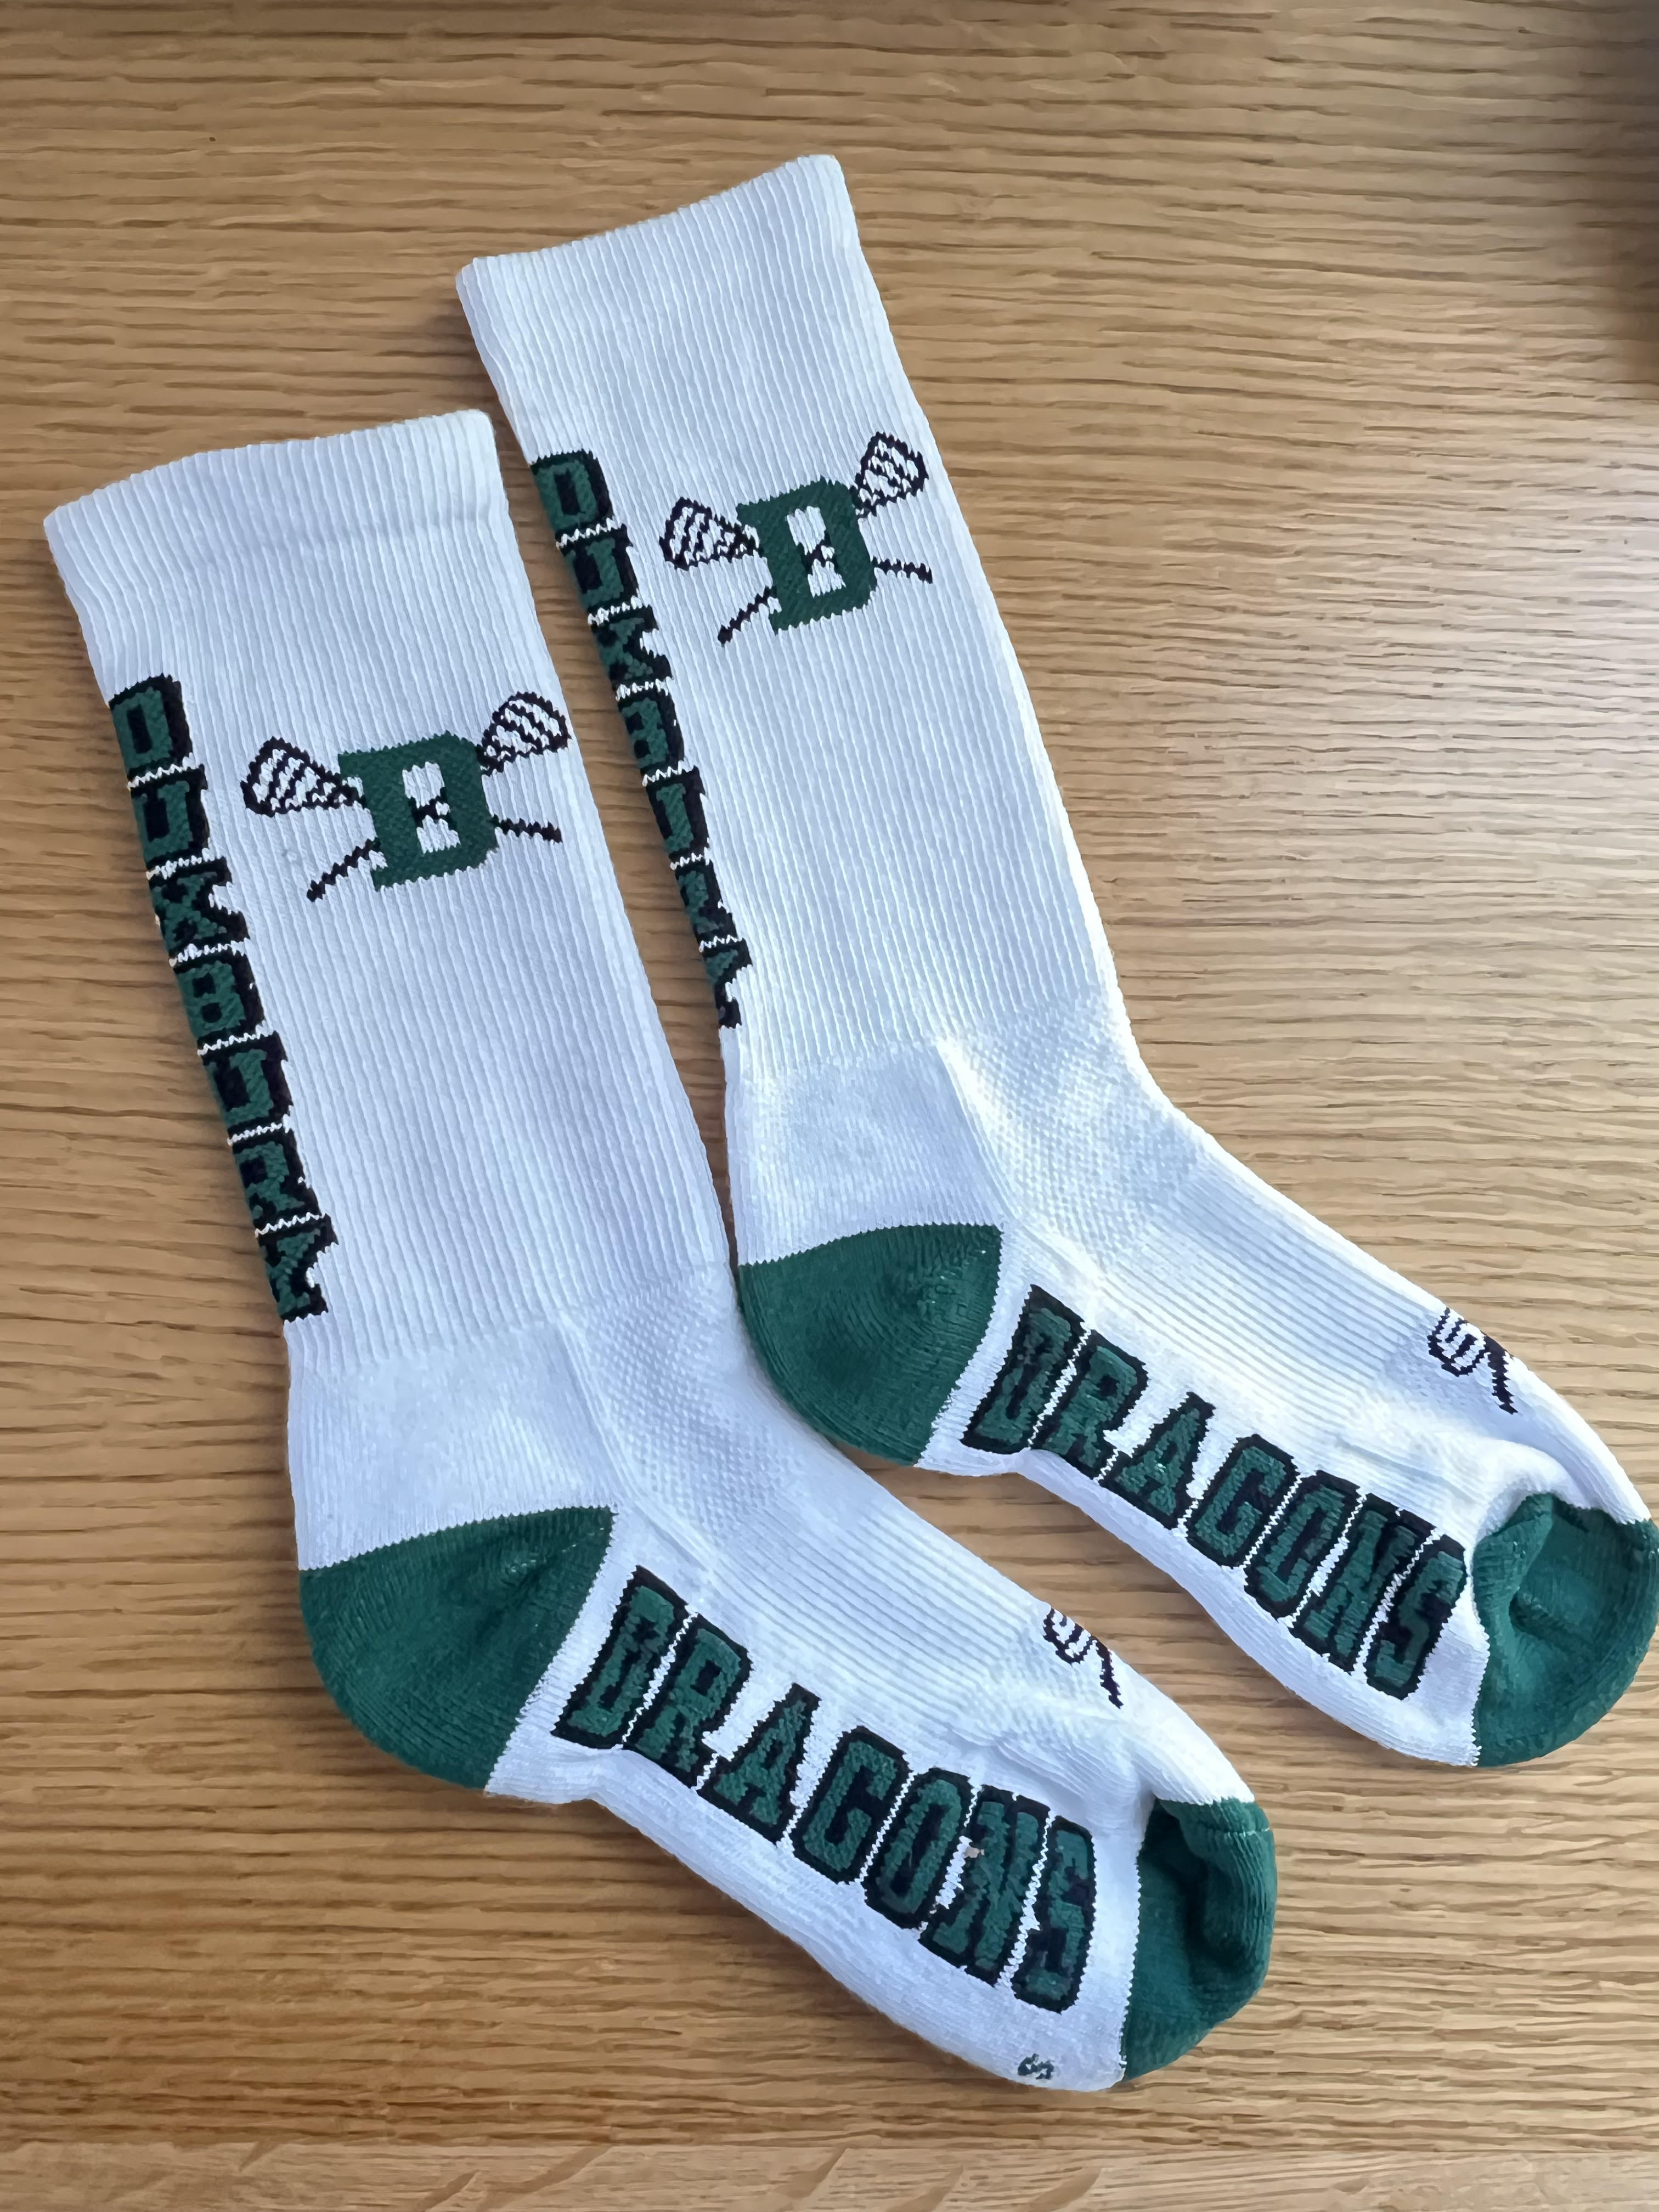 *DGYL Sock Fundraiser to Benefit Harlem Lacrosse!